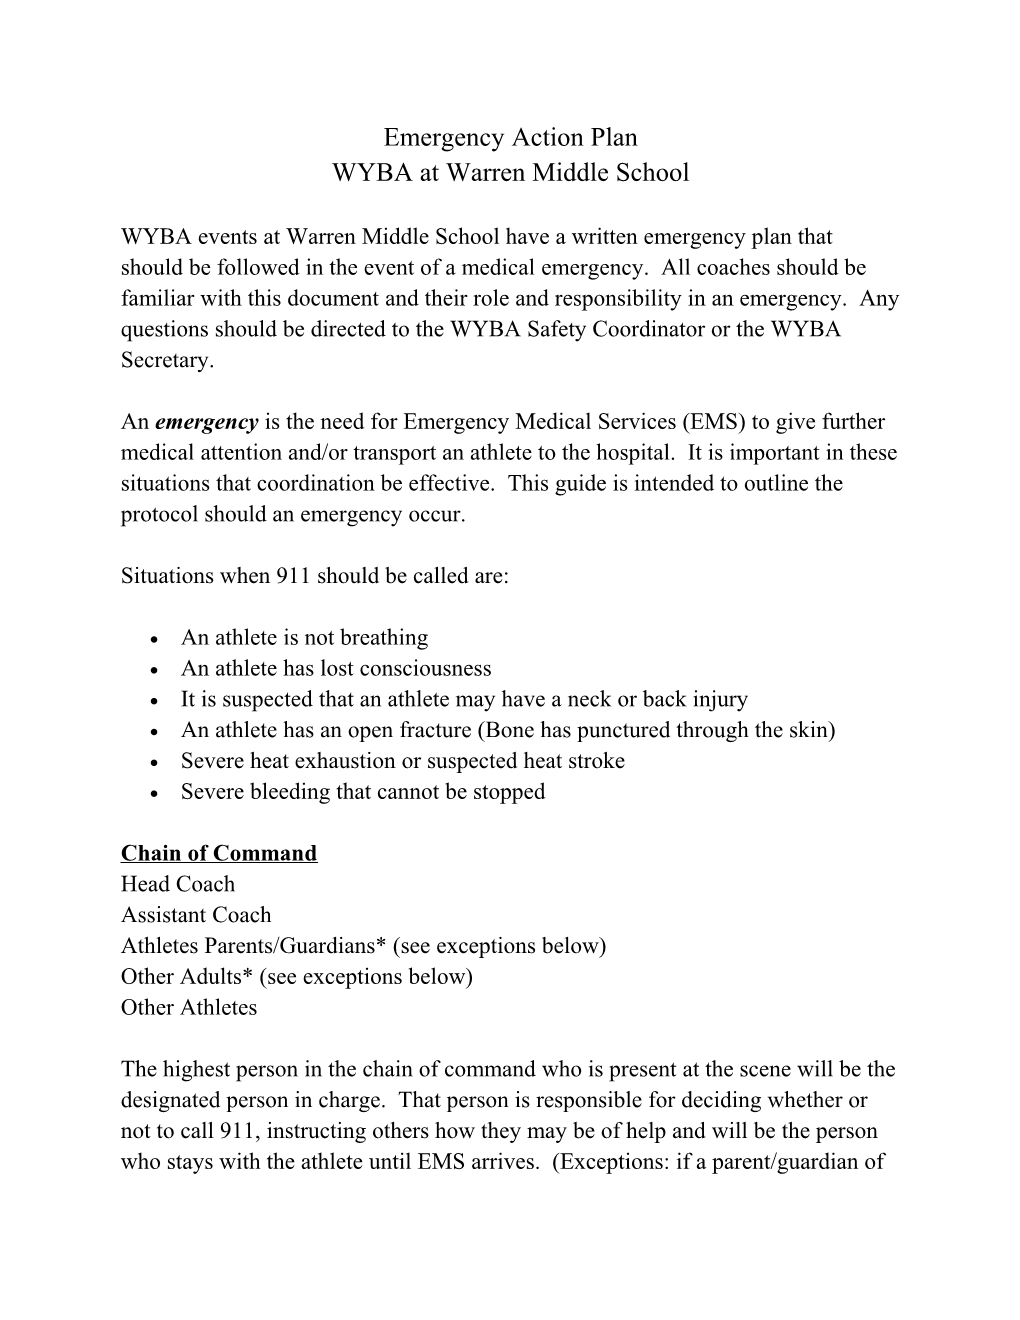 WYBA at Warren Middle School